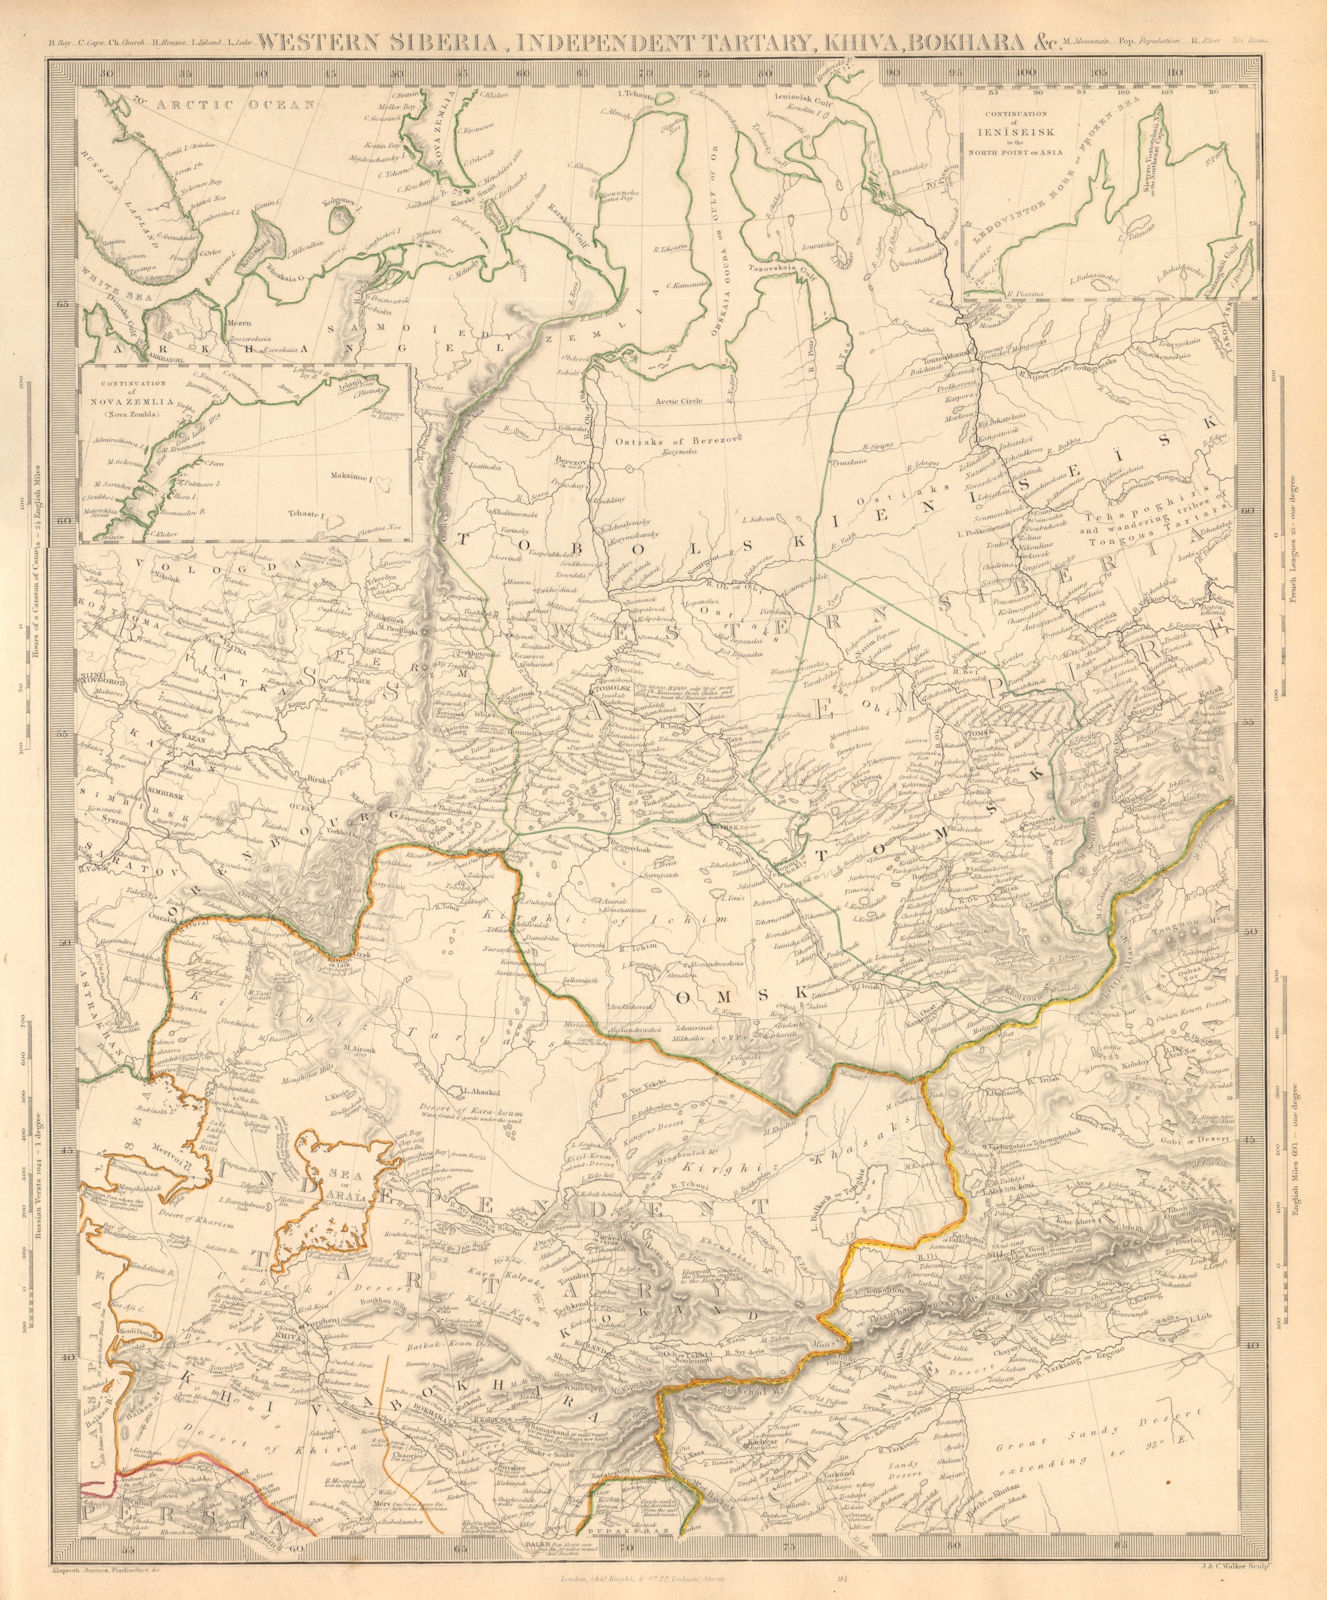 Associate Product CENTRAL ASIA. Western Siberia, Khiva Bokhara. Independent Tartary. SDUK 1846 map